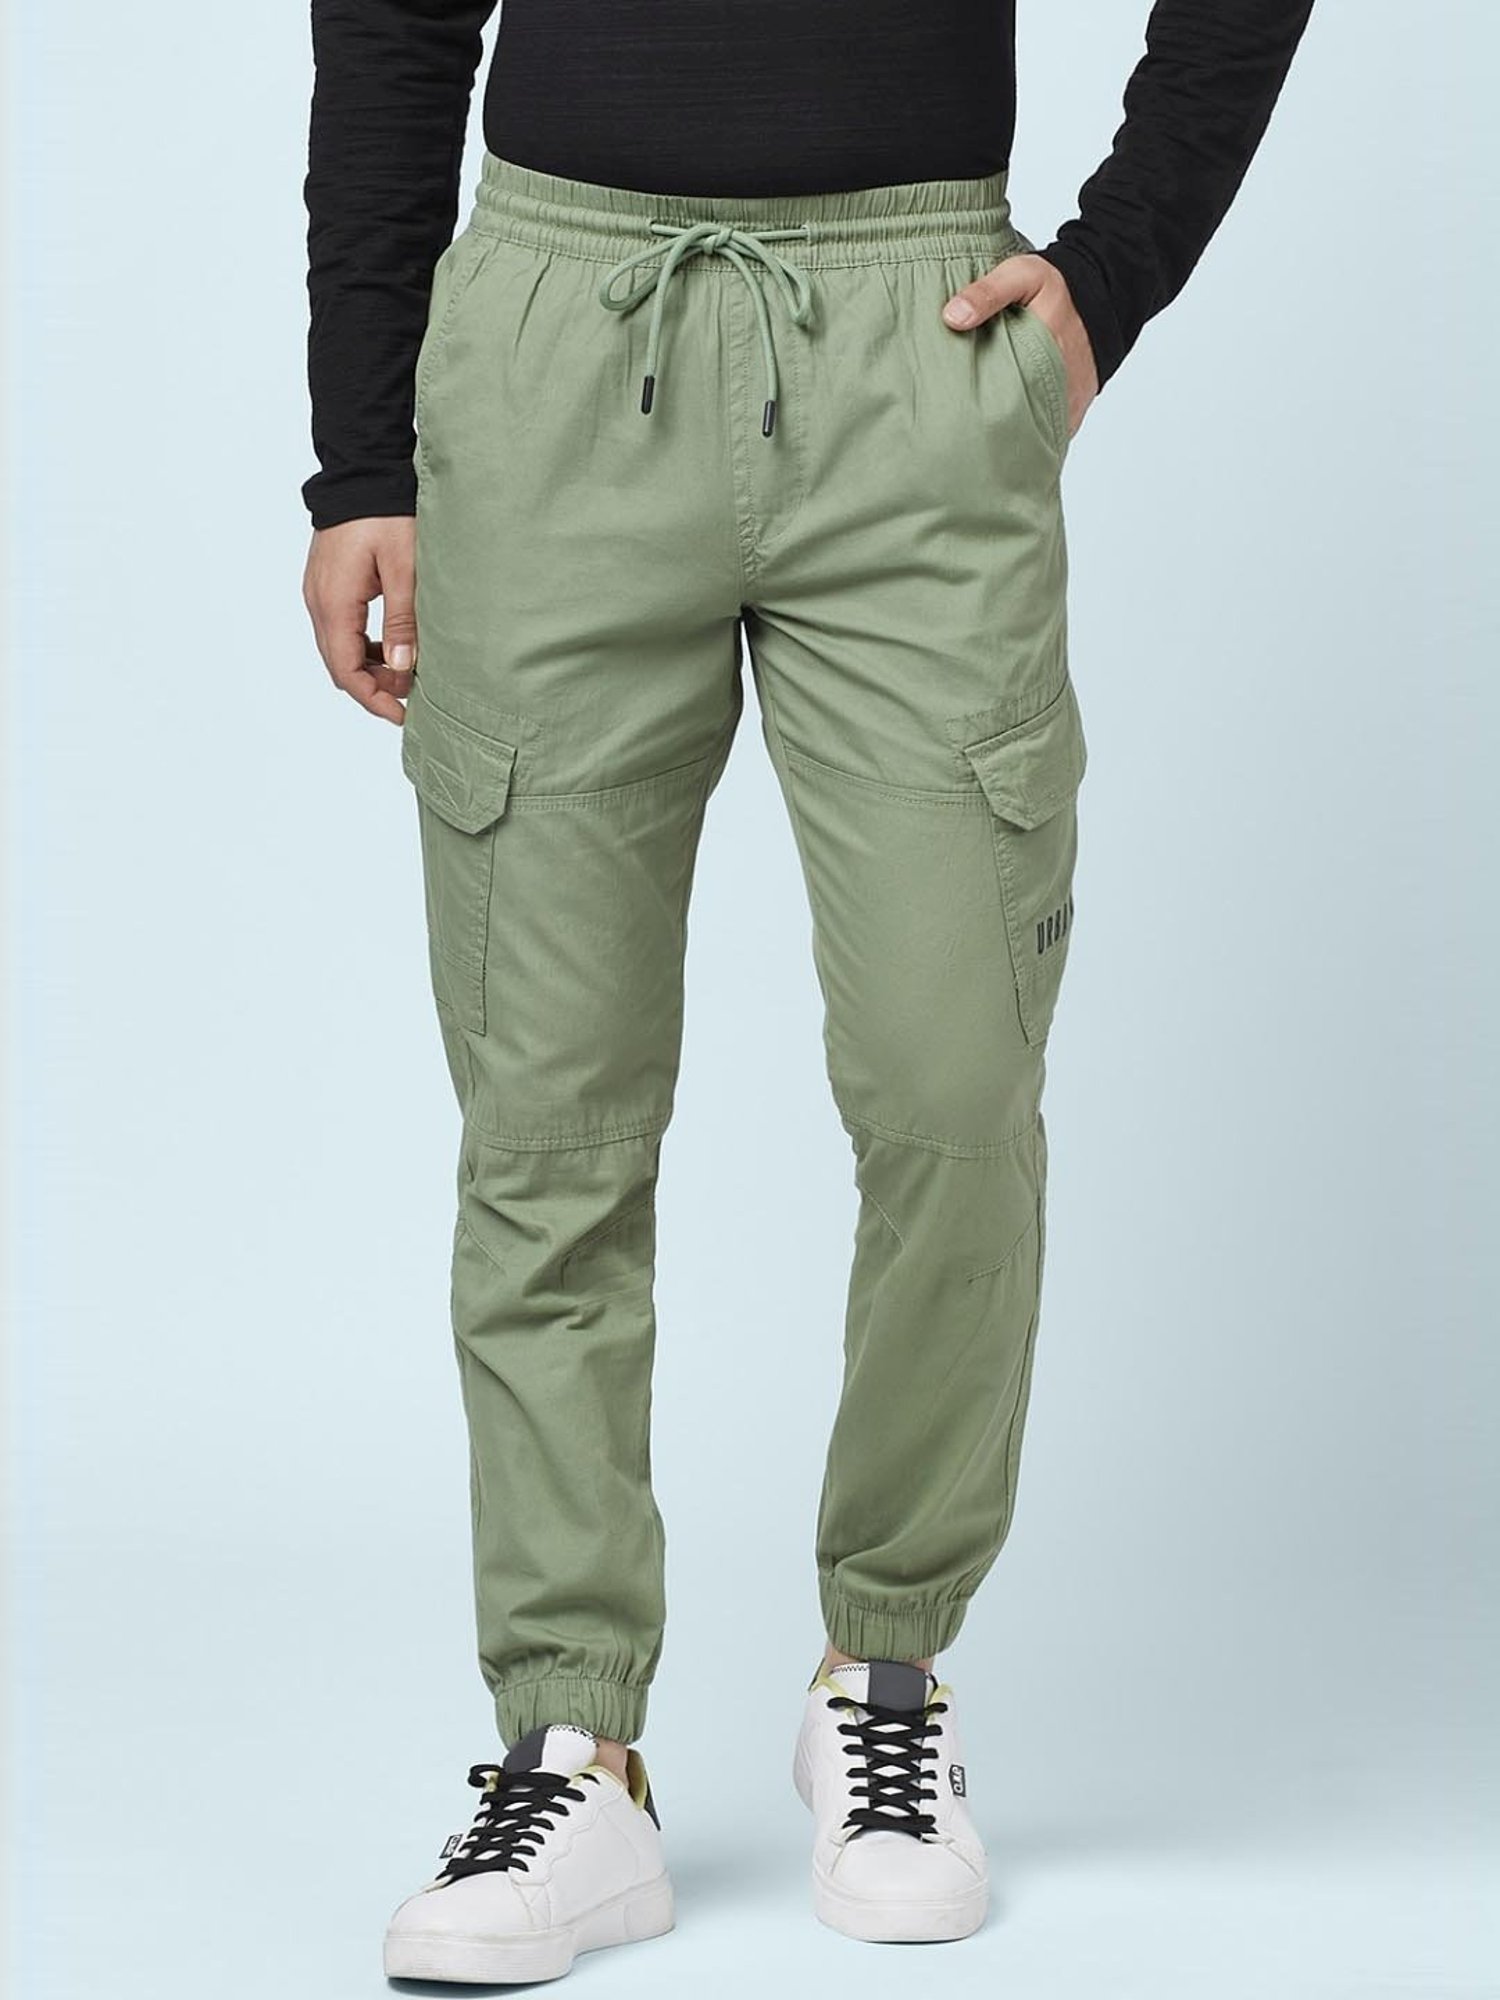 Buy Urban Ranger by Pantaloons Men's Slim Fit Casual Trousers  (110040936_Grey_34) at Amazon.in